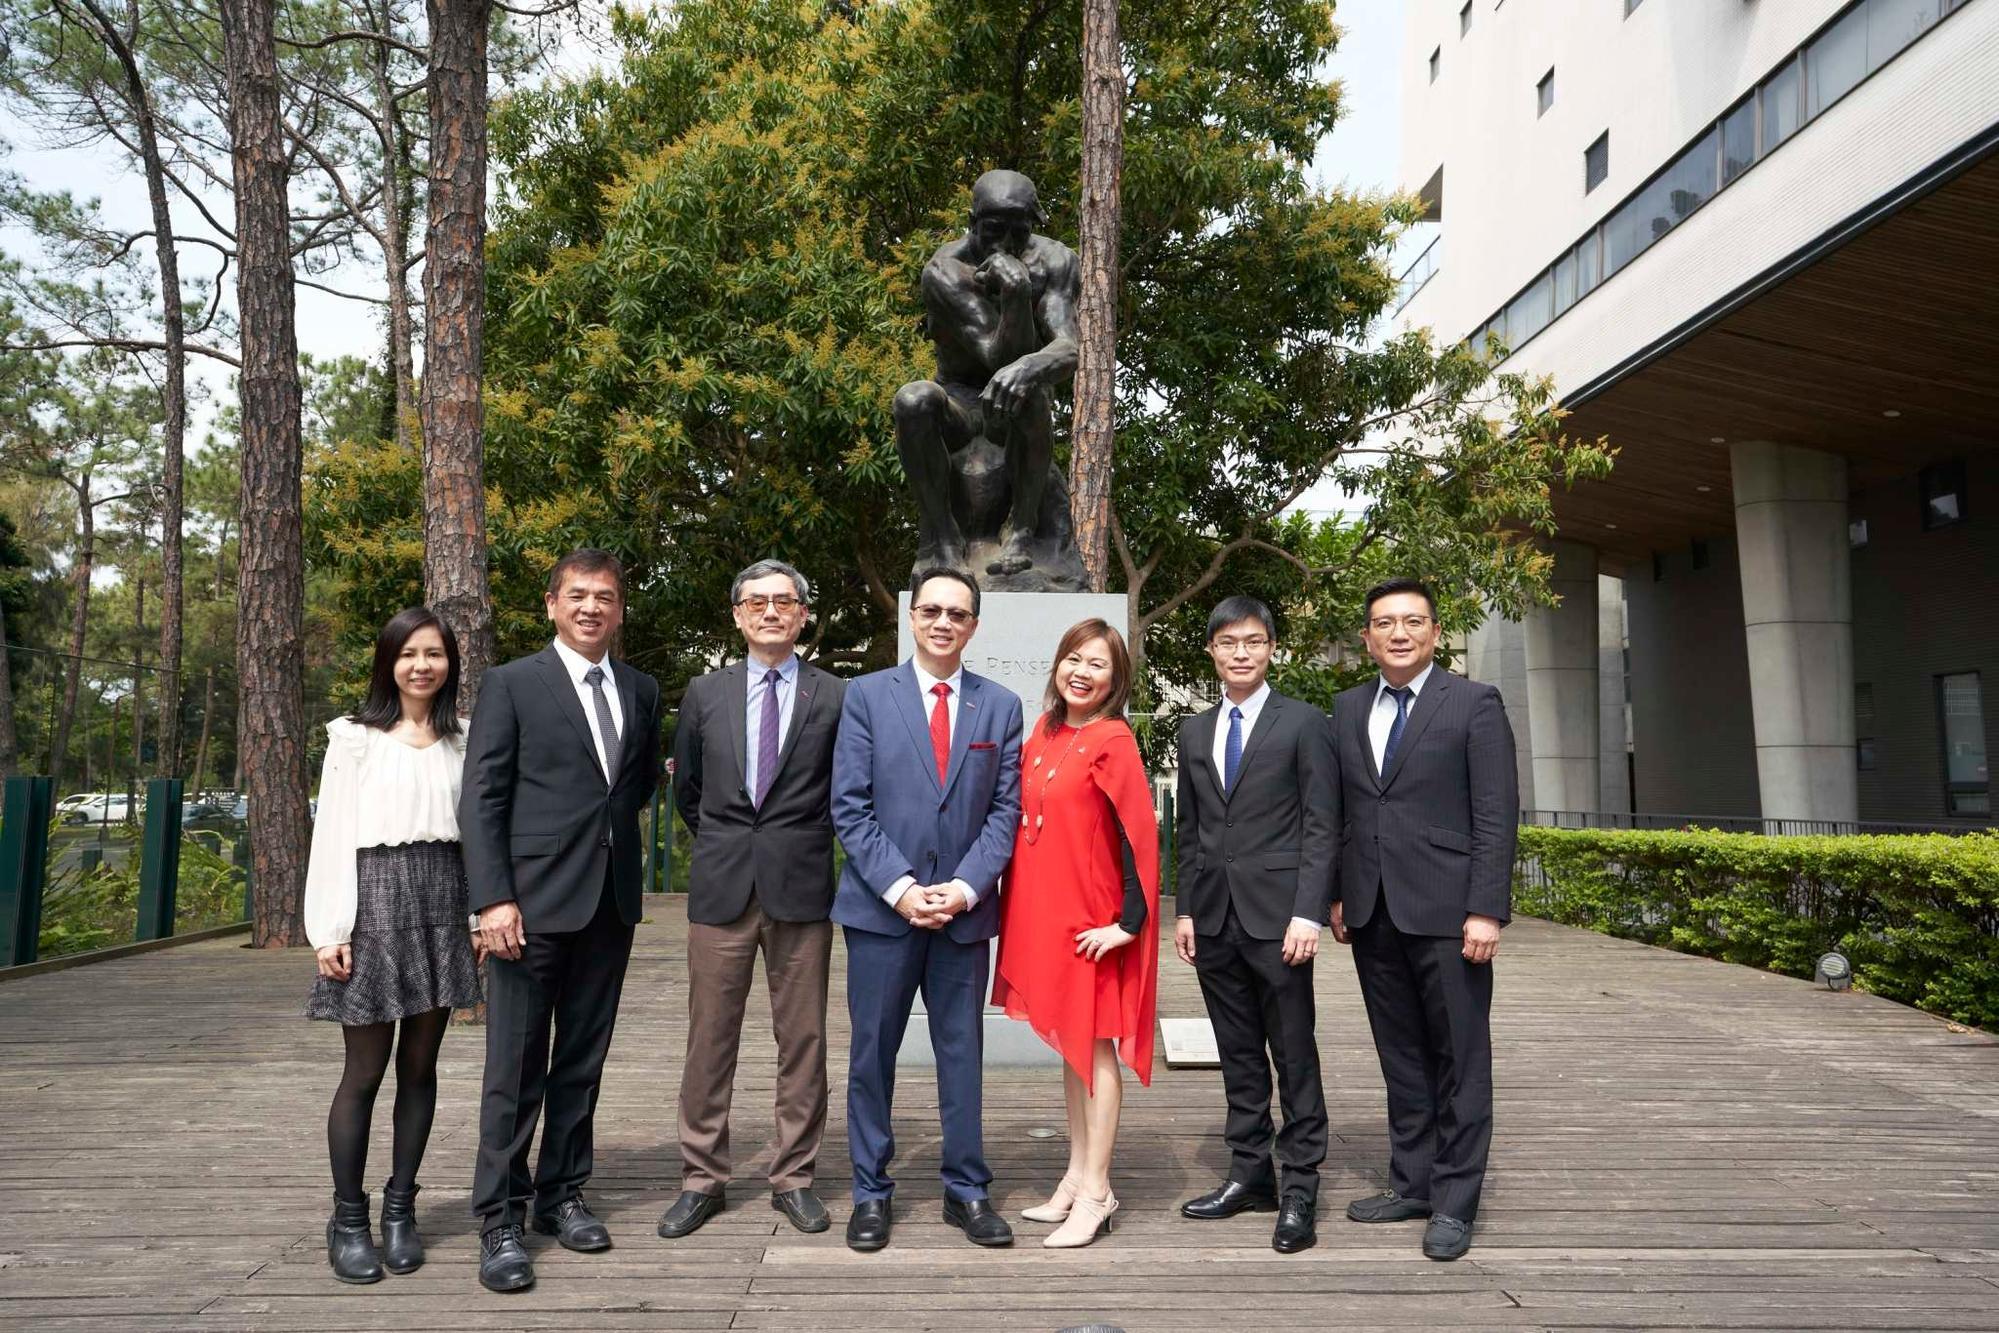 The NJIT delegation being shown the NTHU campus (left to right): Chen Hsuan-jung, Jordan Hu, Edwin Hou, Teik C. Lim, Gina Lim, Liu Chang-hua, and Cai Fengming.